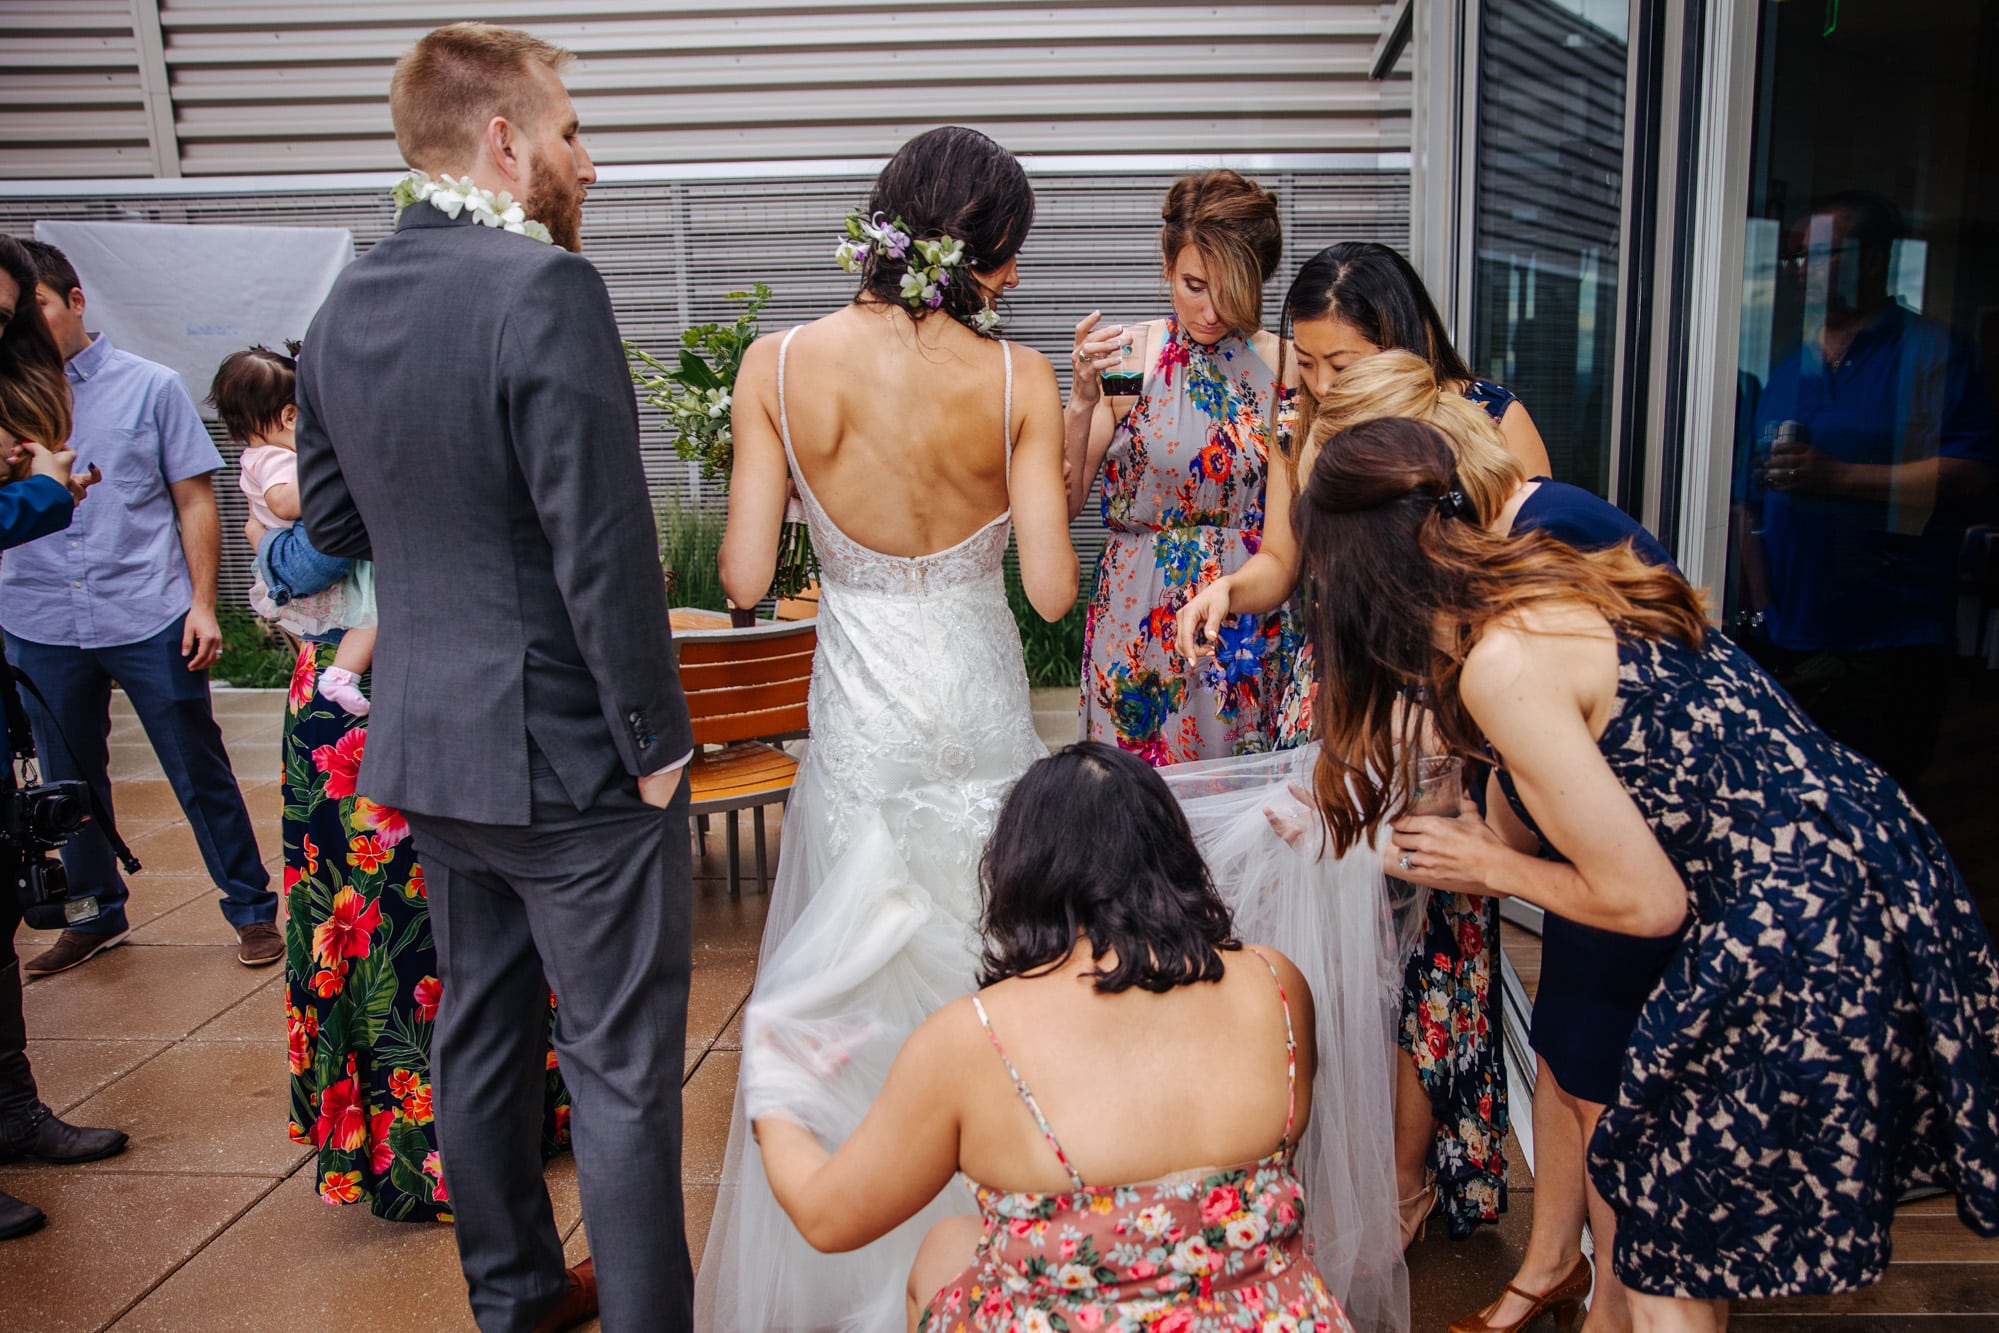 bustling wedding dress, bridesmaids bustling brides dress, putting brides dress up for dancing, bride with bridesmaids